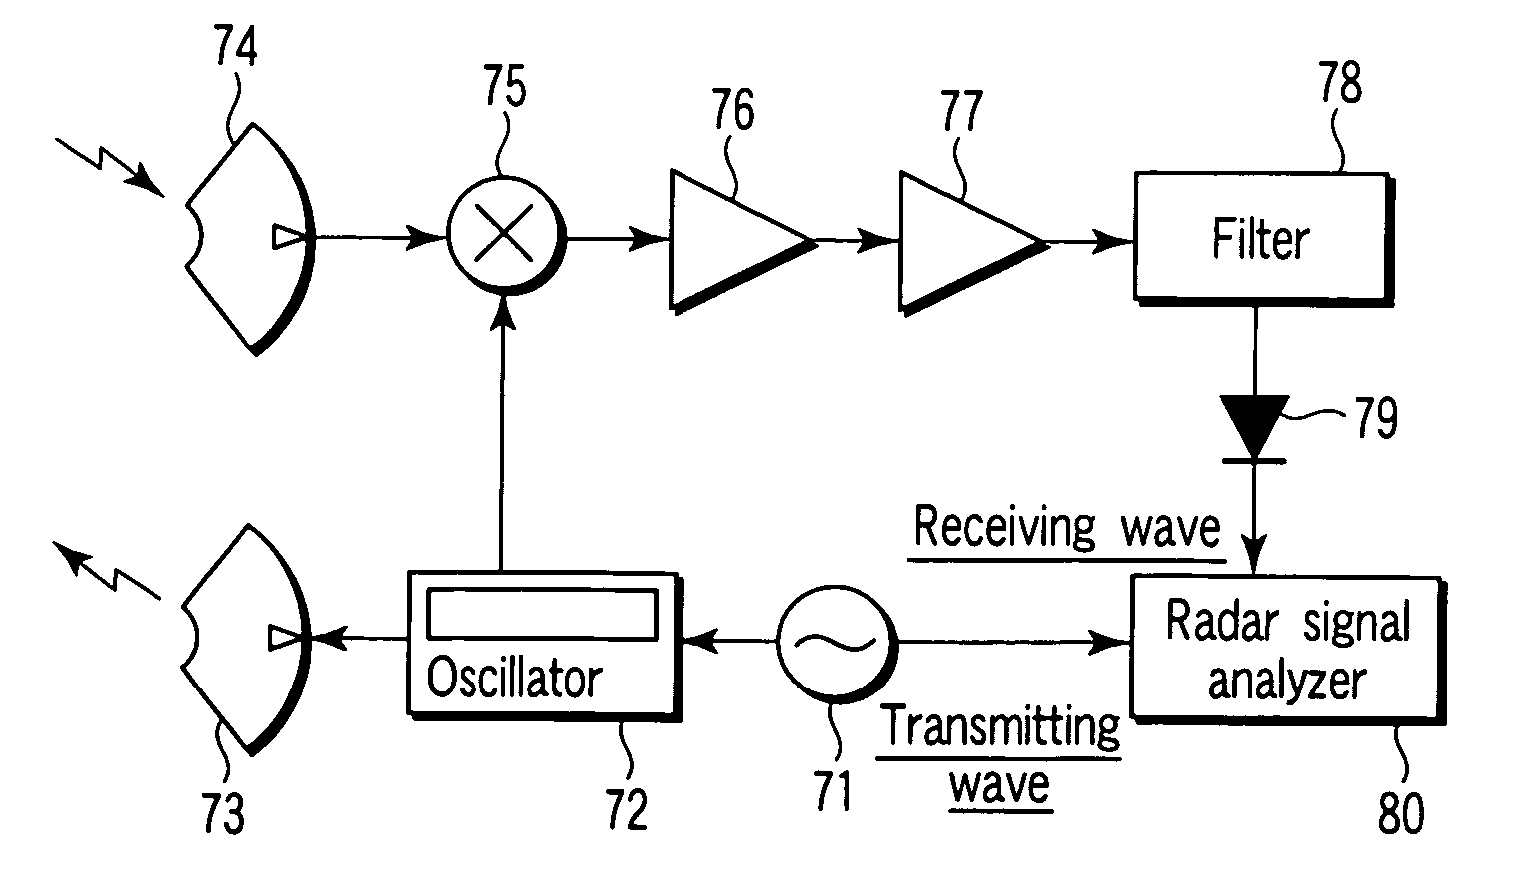 High-frequency oscillator